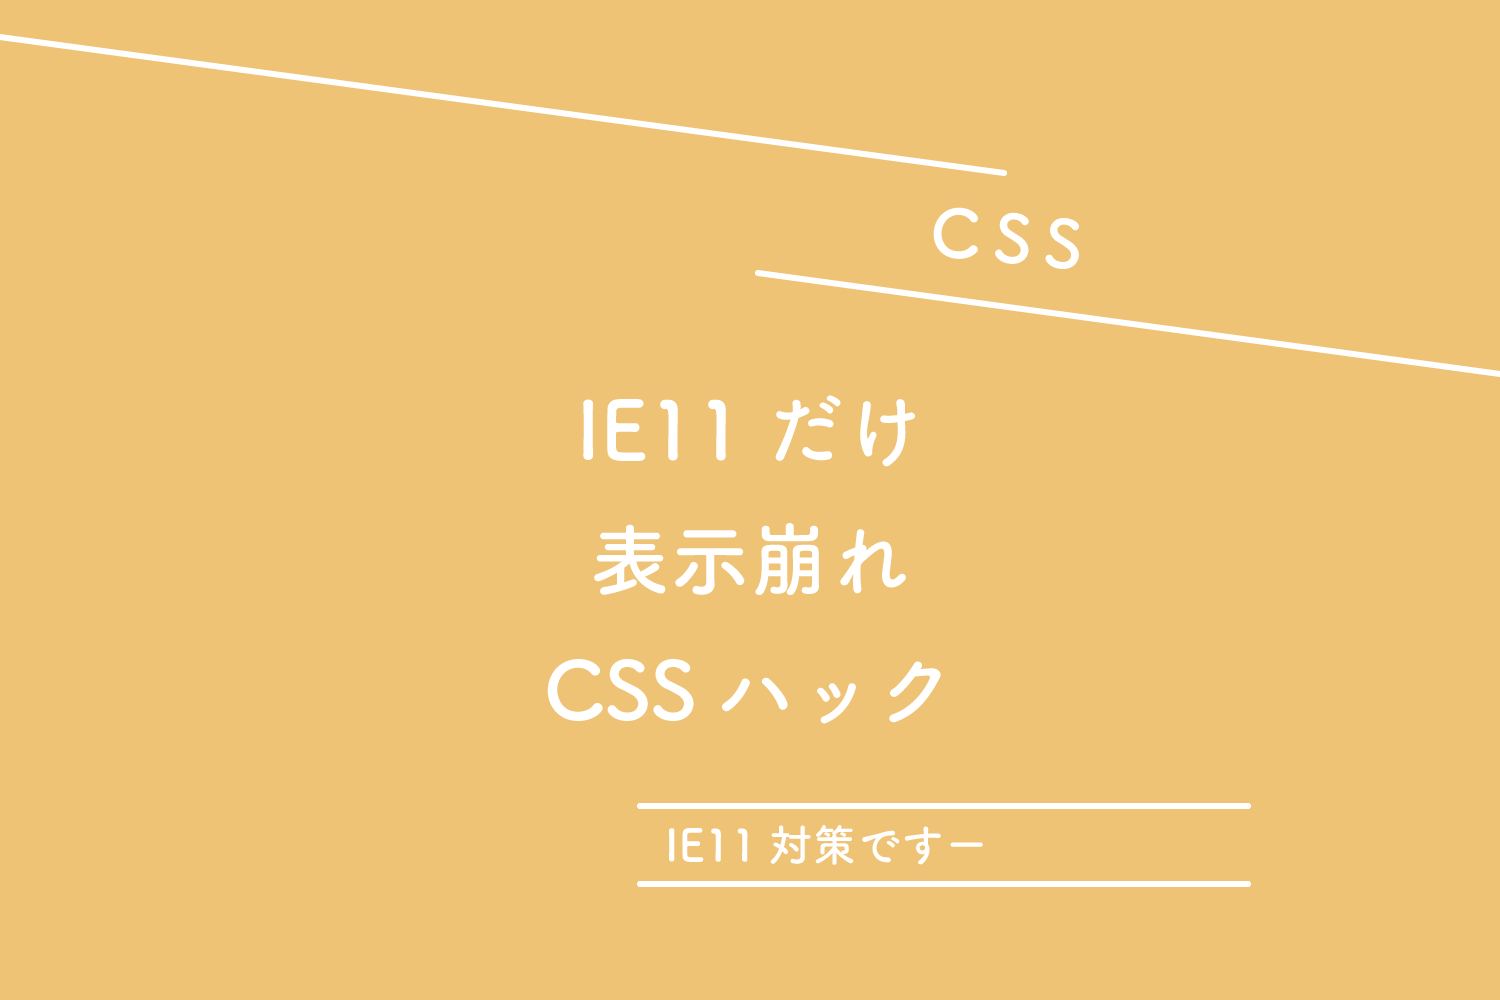 【CSS】IE11だけ表示崩れしたときのCSSハック